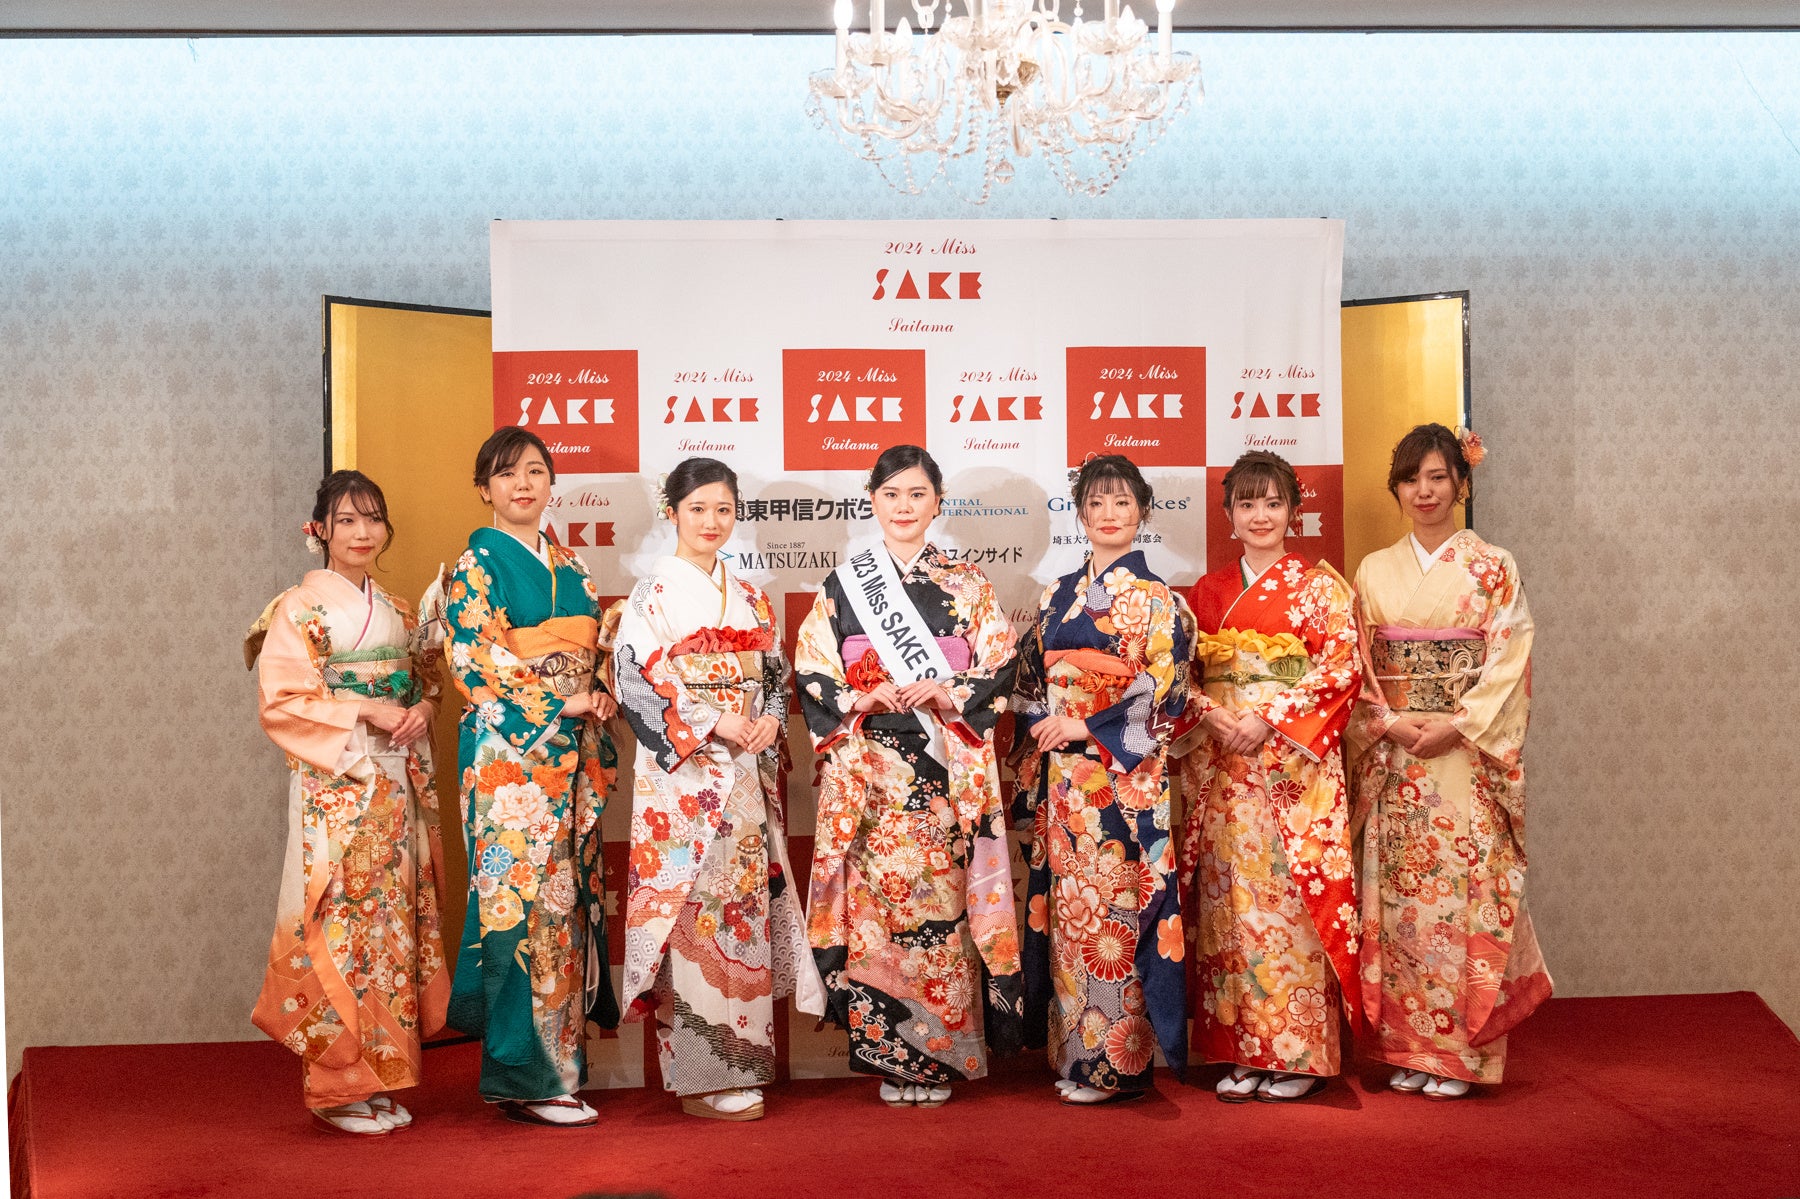 2024 Miss SAKE埼玉大会に出場するファイナリストのお披露目記者会見を行いました。